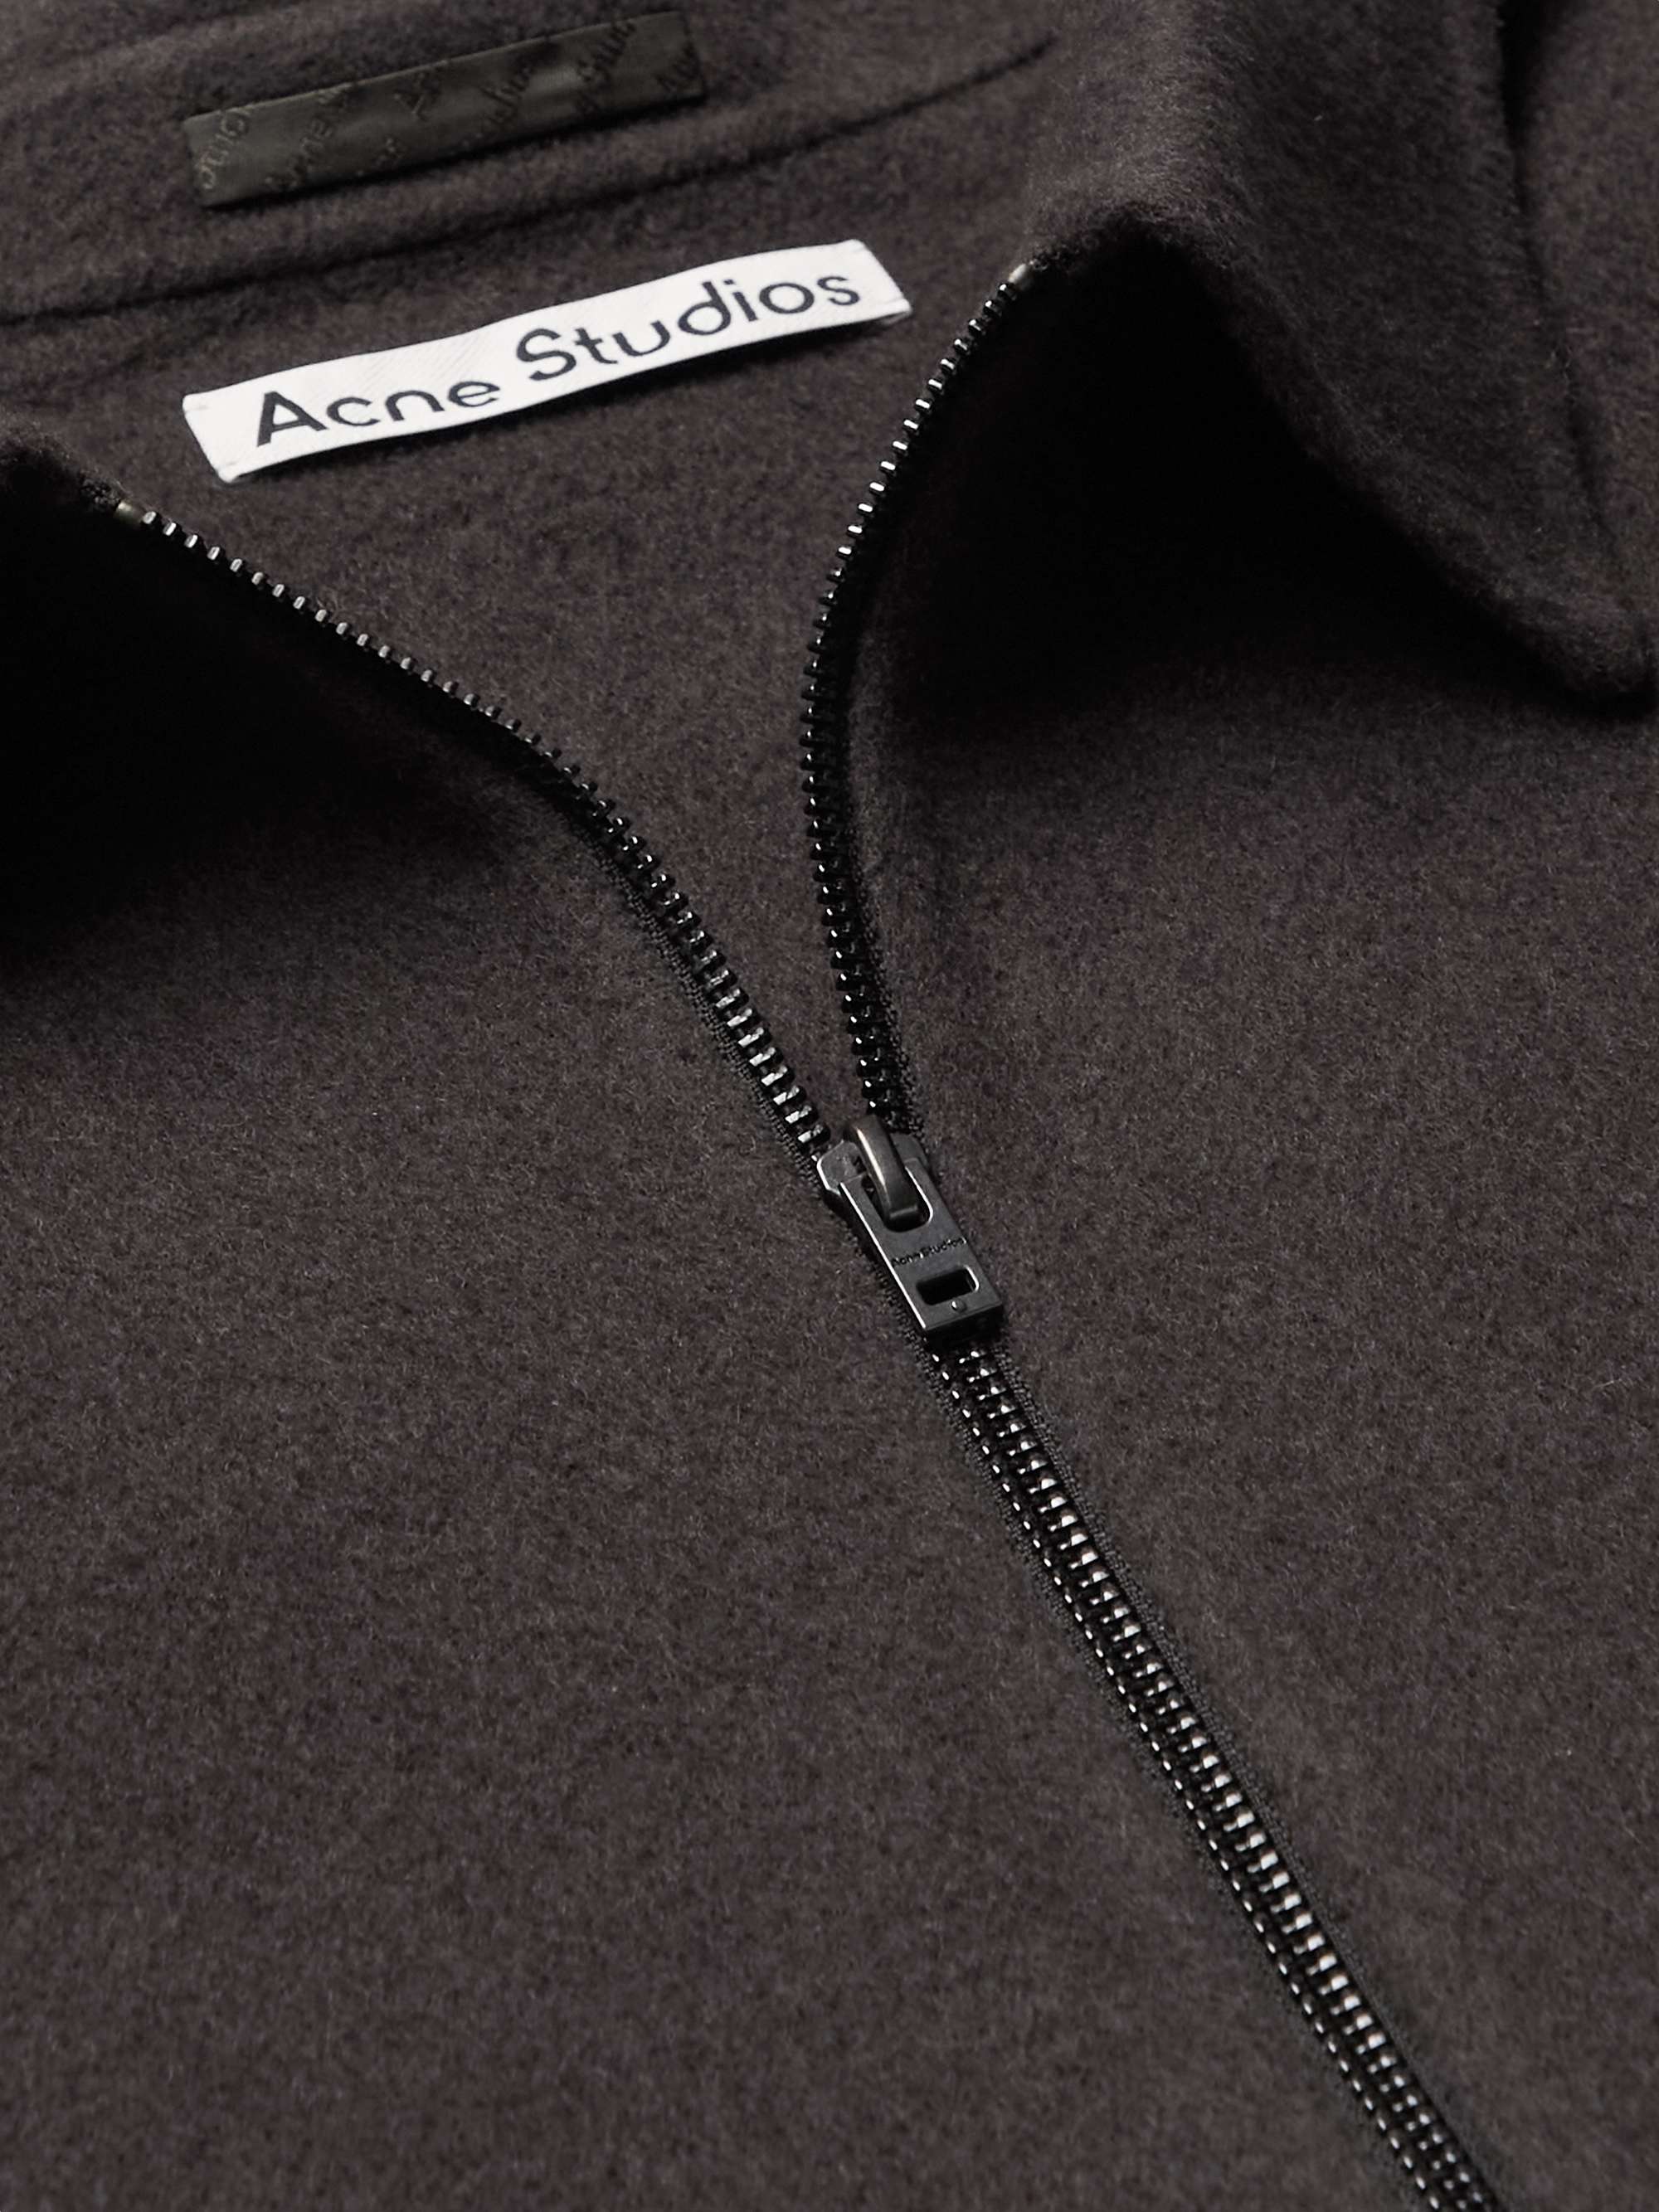 ACNE STUDIOS Doverio Double-Faced Wool Blouson Jacket